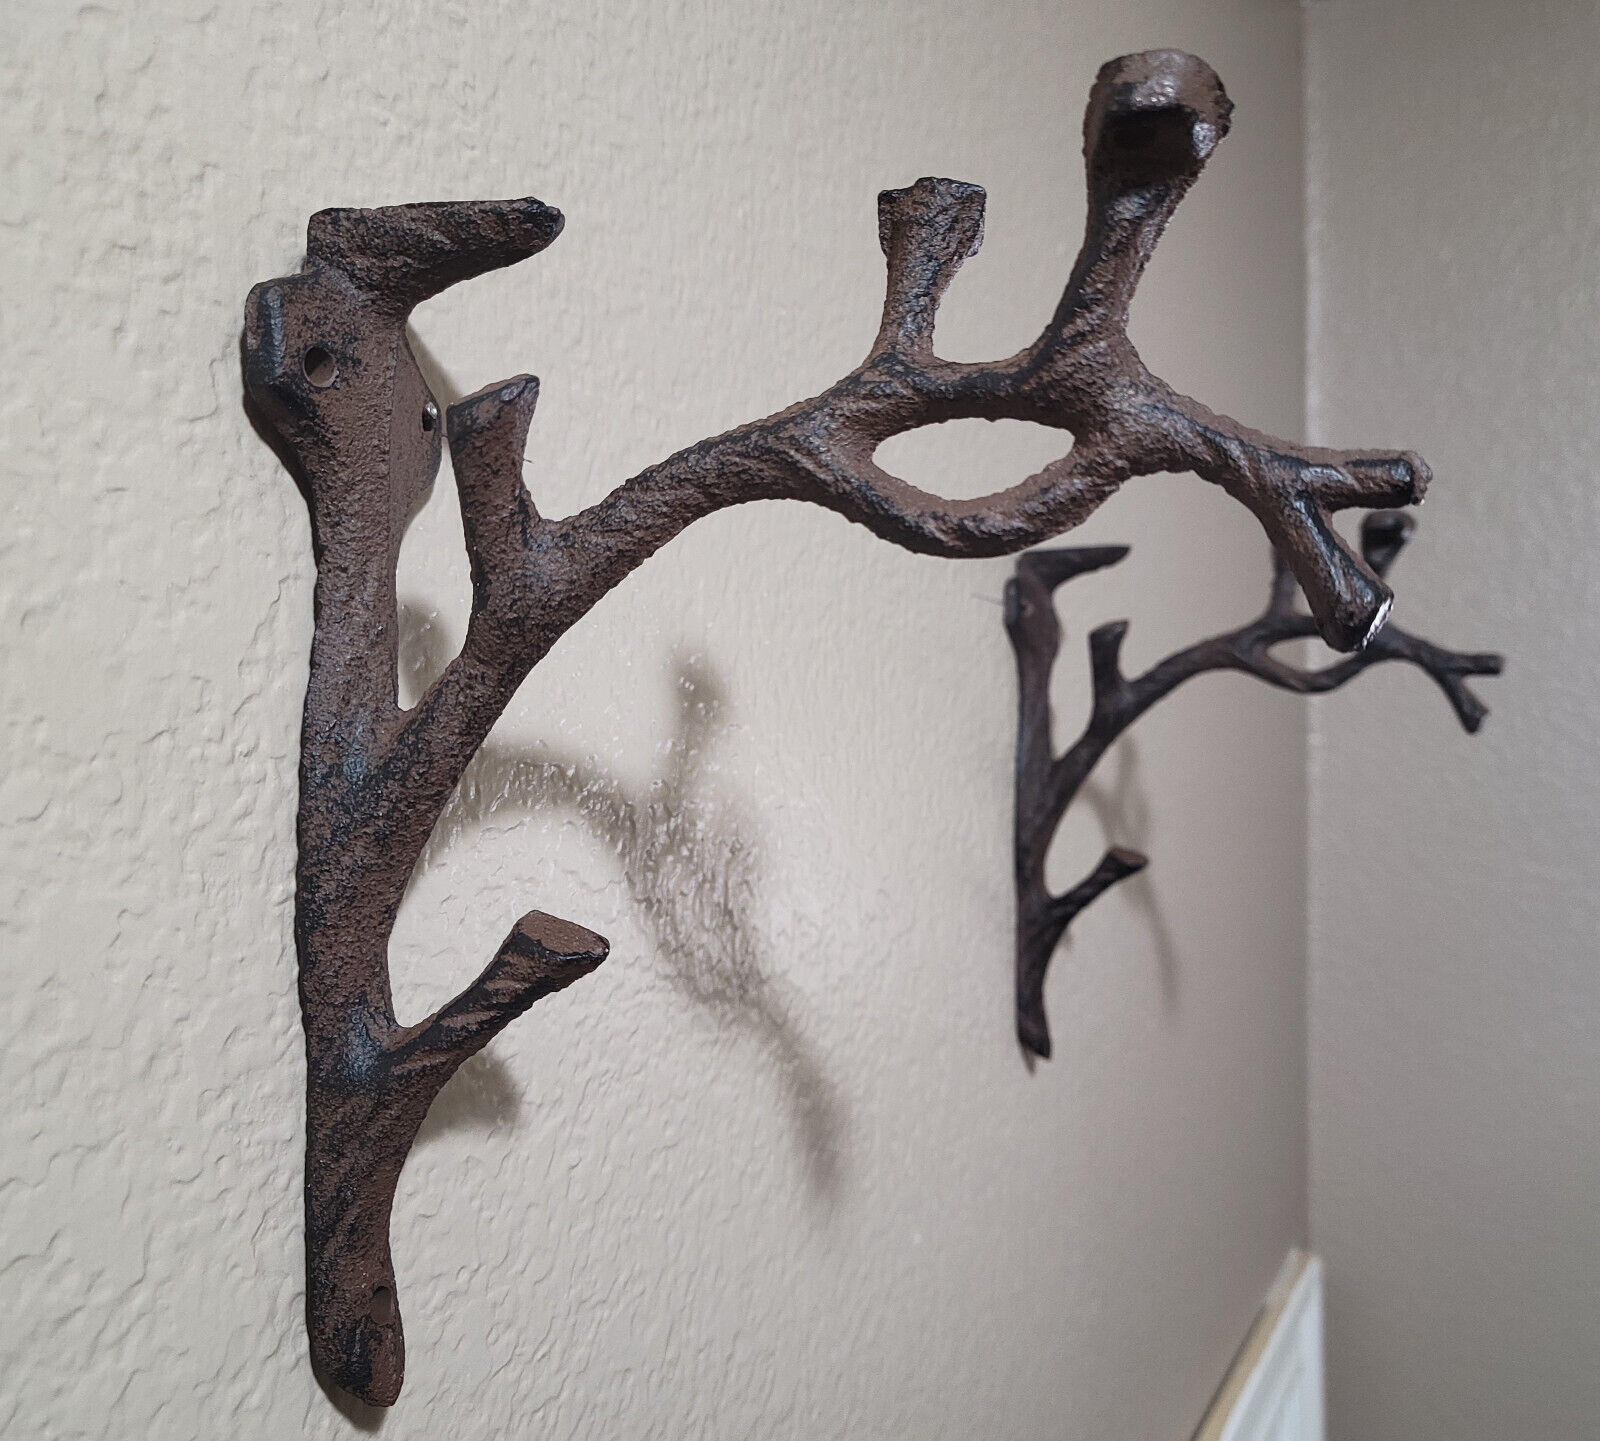 2 Rustic Cast Iron Shelf Bracket Wall Mount Hardware Brace Tree Branch Sculpture Без бренда - фотография #3